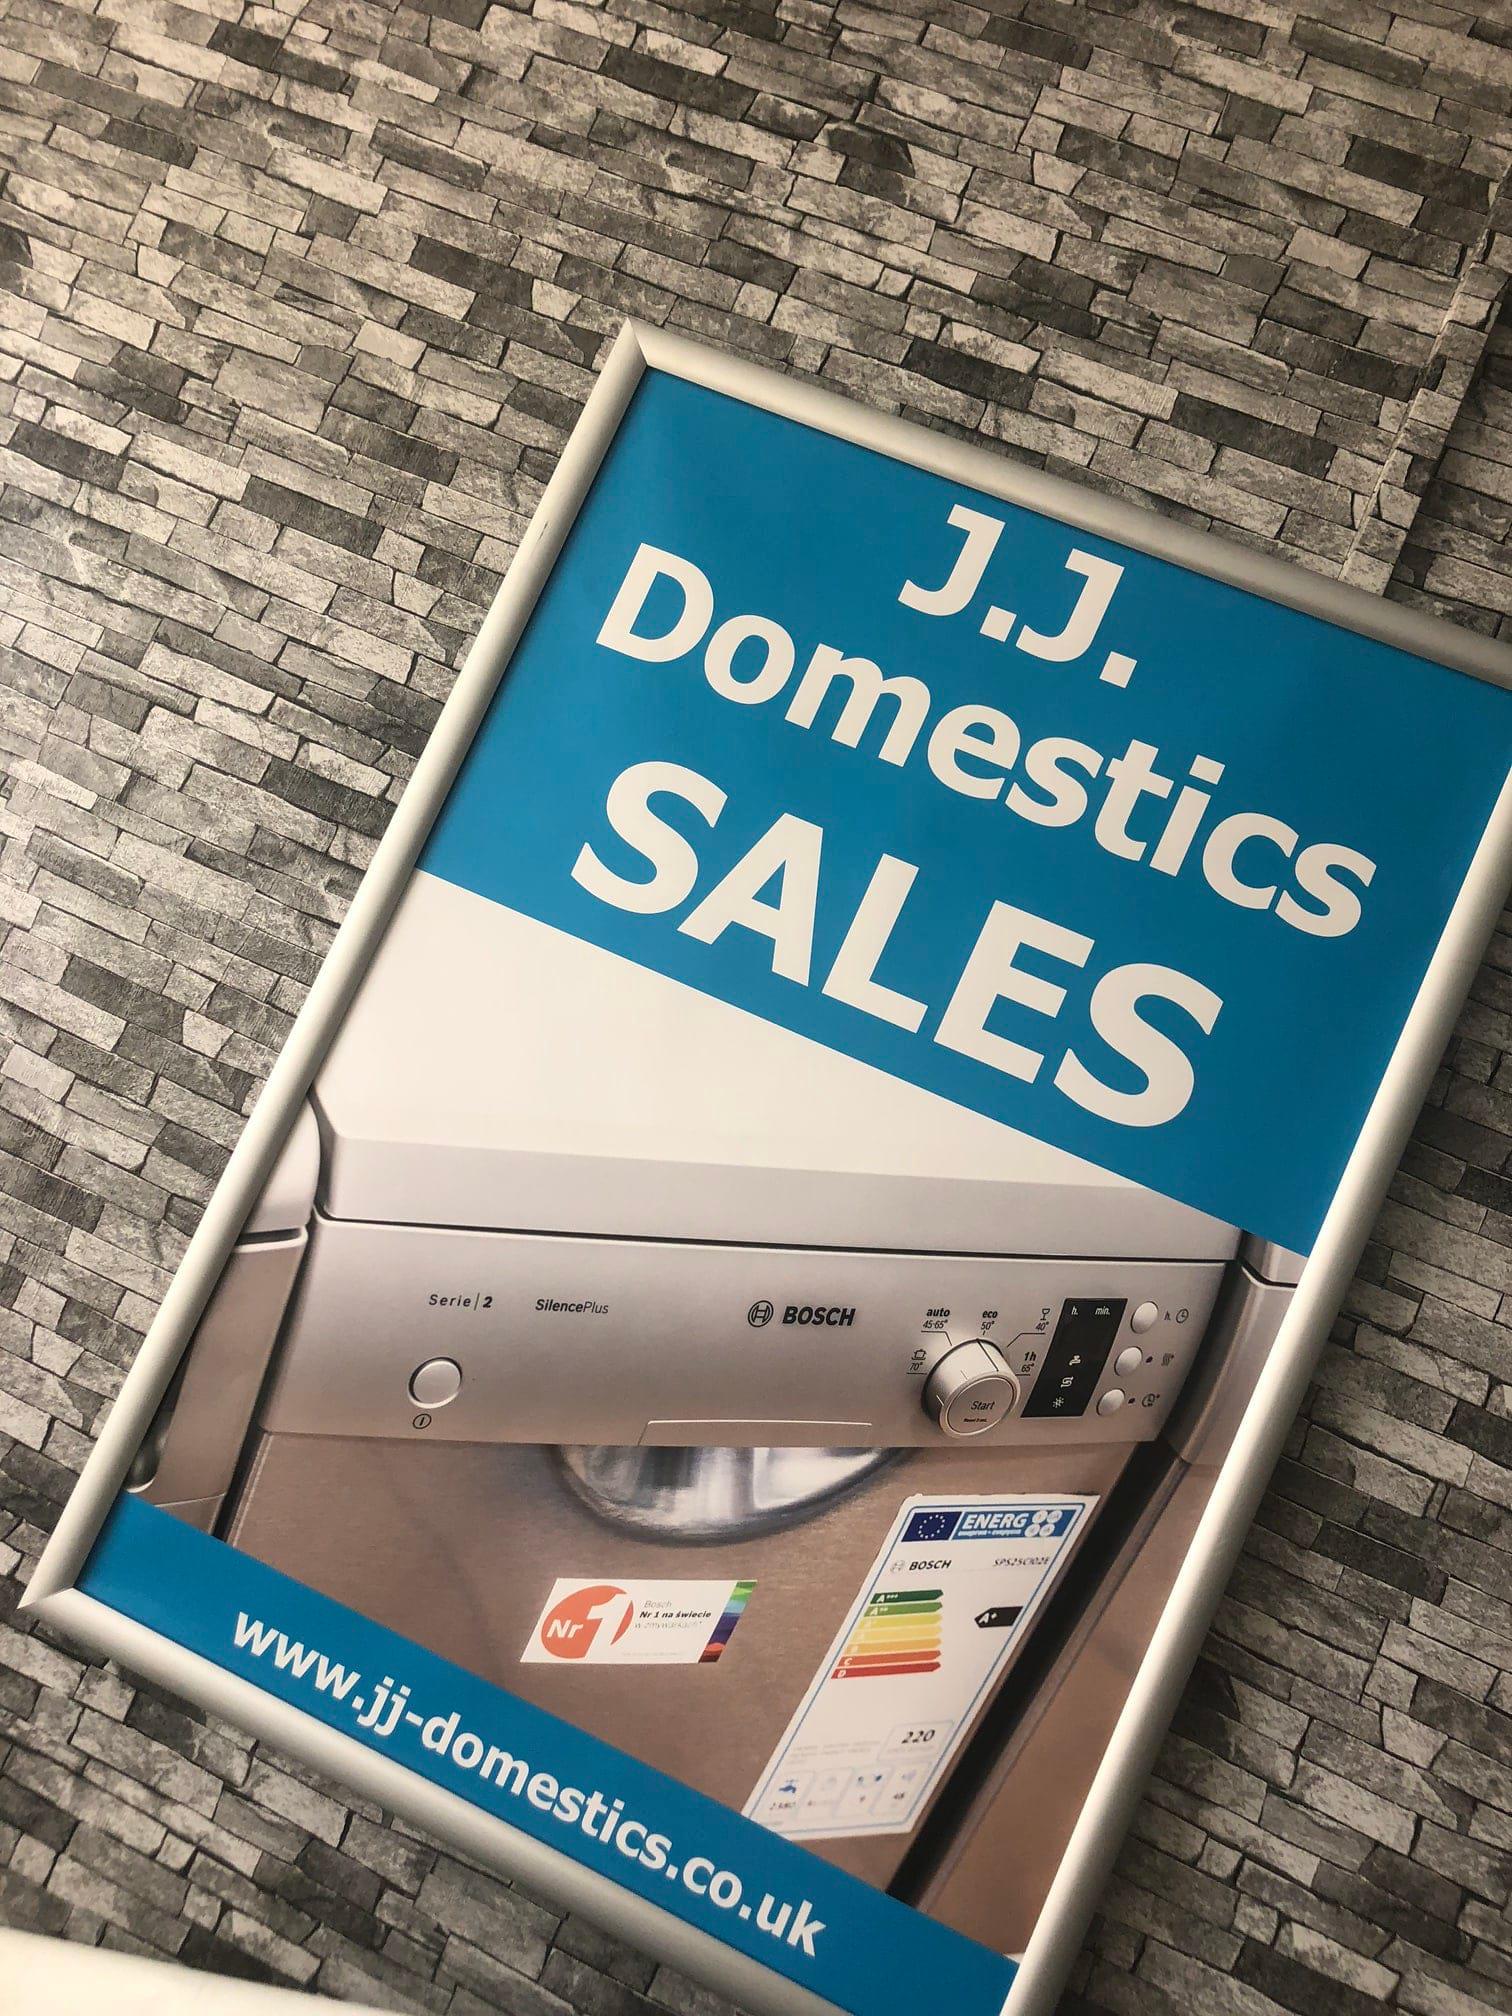 Images J J Domestics Ltd